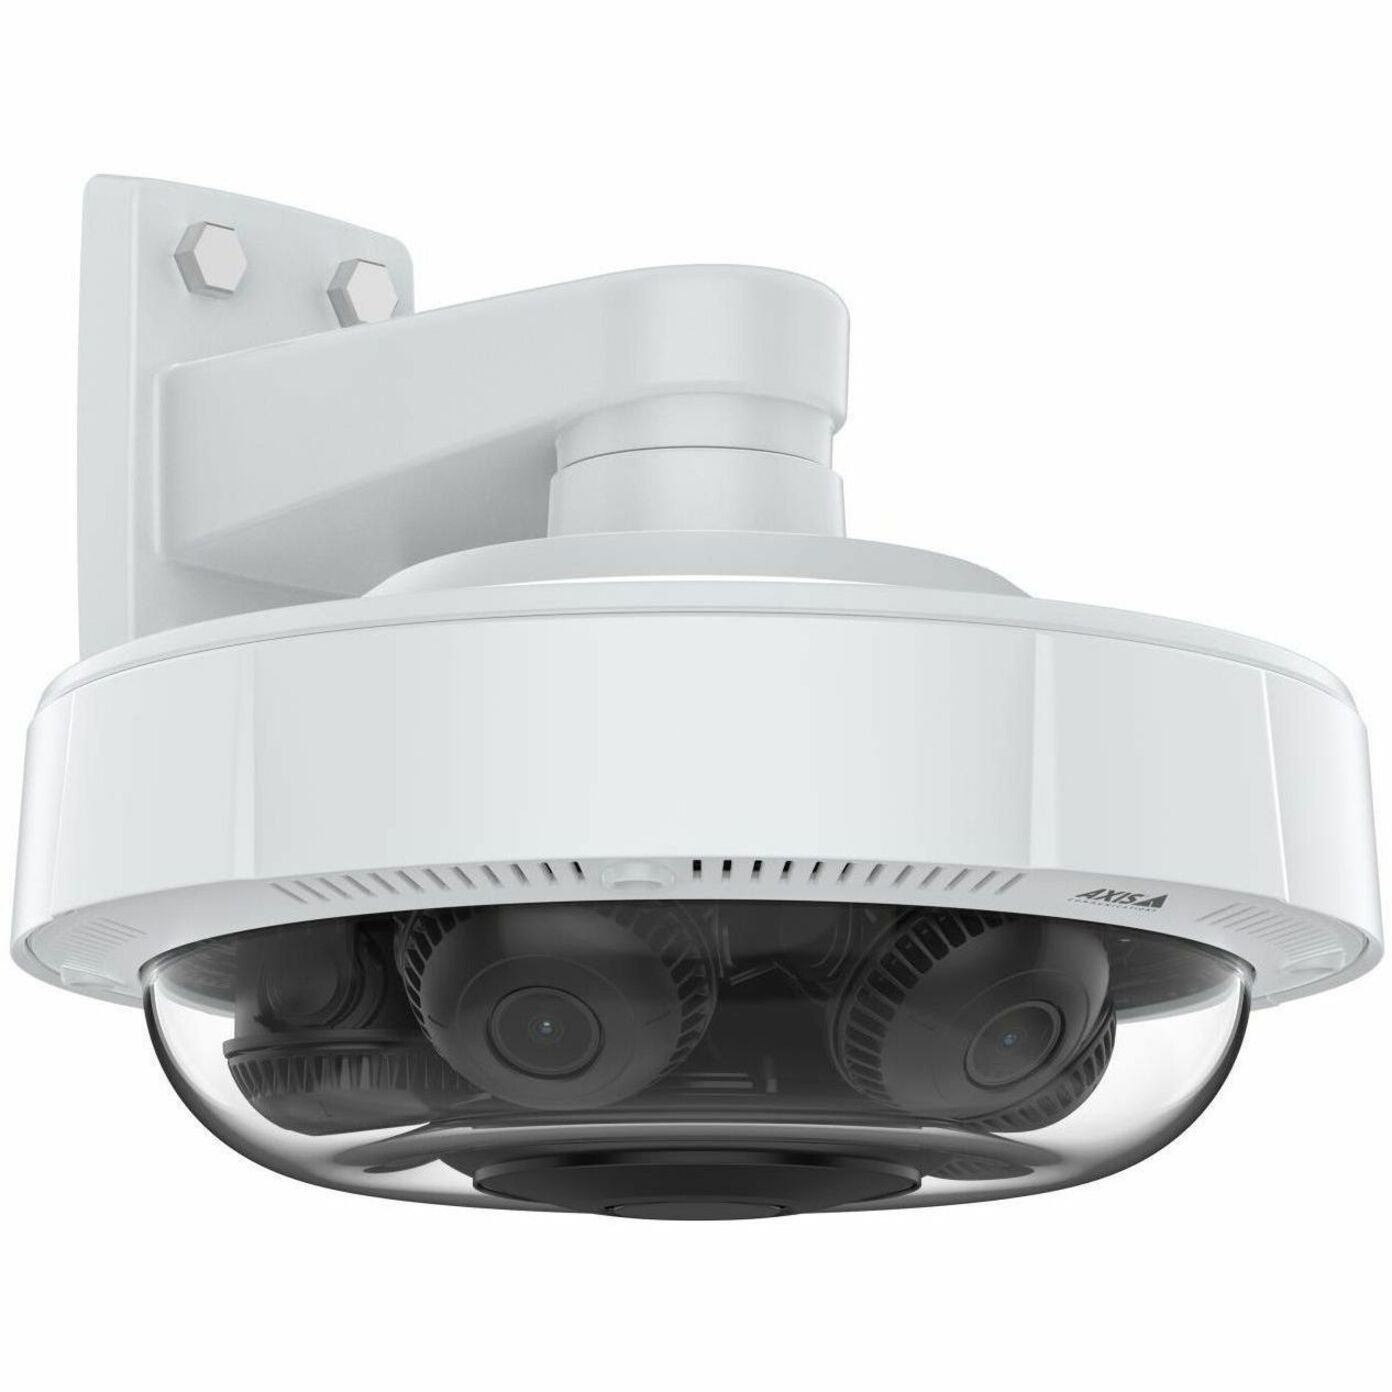 AXIS 02635-001 P3738-PLE 파노라마 카메라 4x 4K 멀티방향 딥러닝 가변초점 렌즈 2.5배 광학 줌 메모리 카드/클라우드 저장 야외 IK09 충격 보호 IP66/IP67 입법 보호